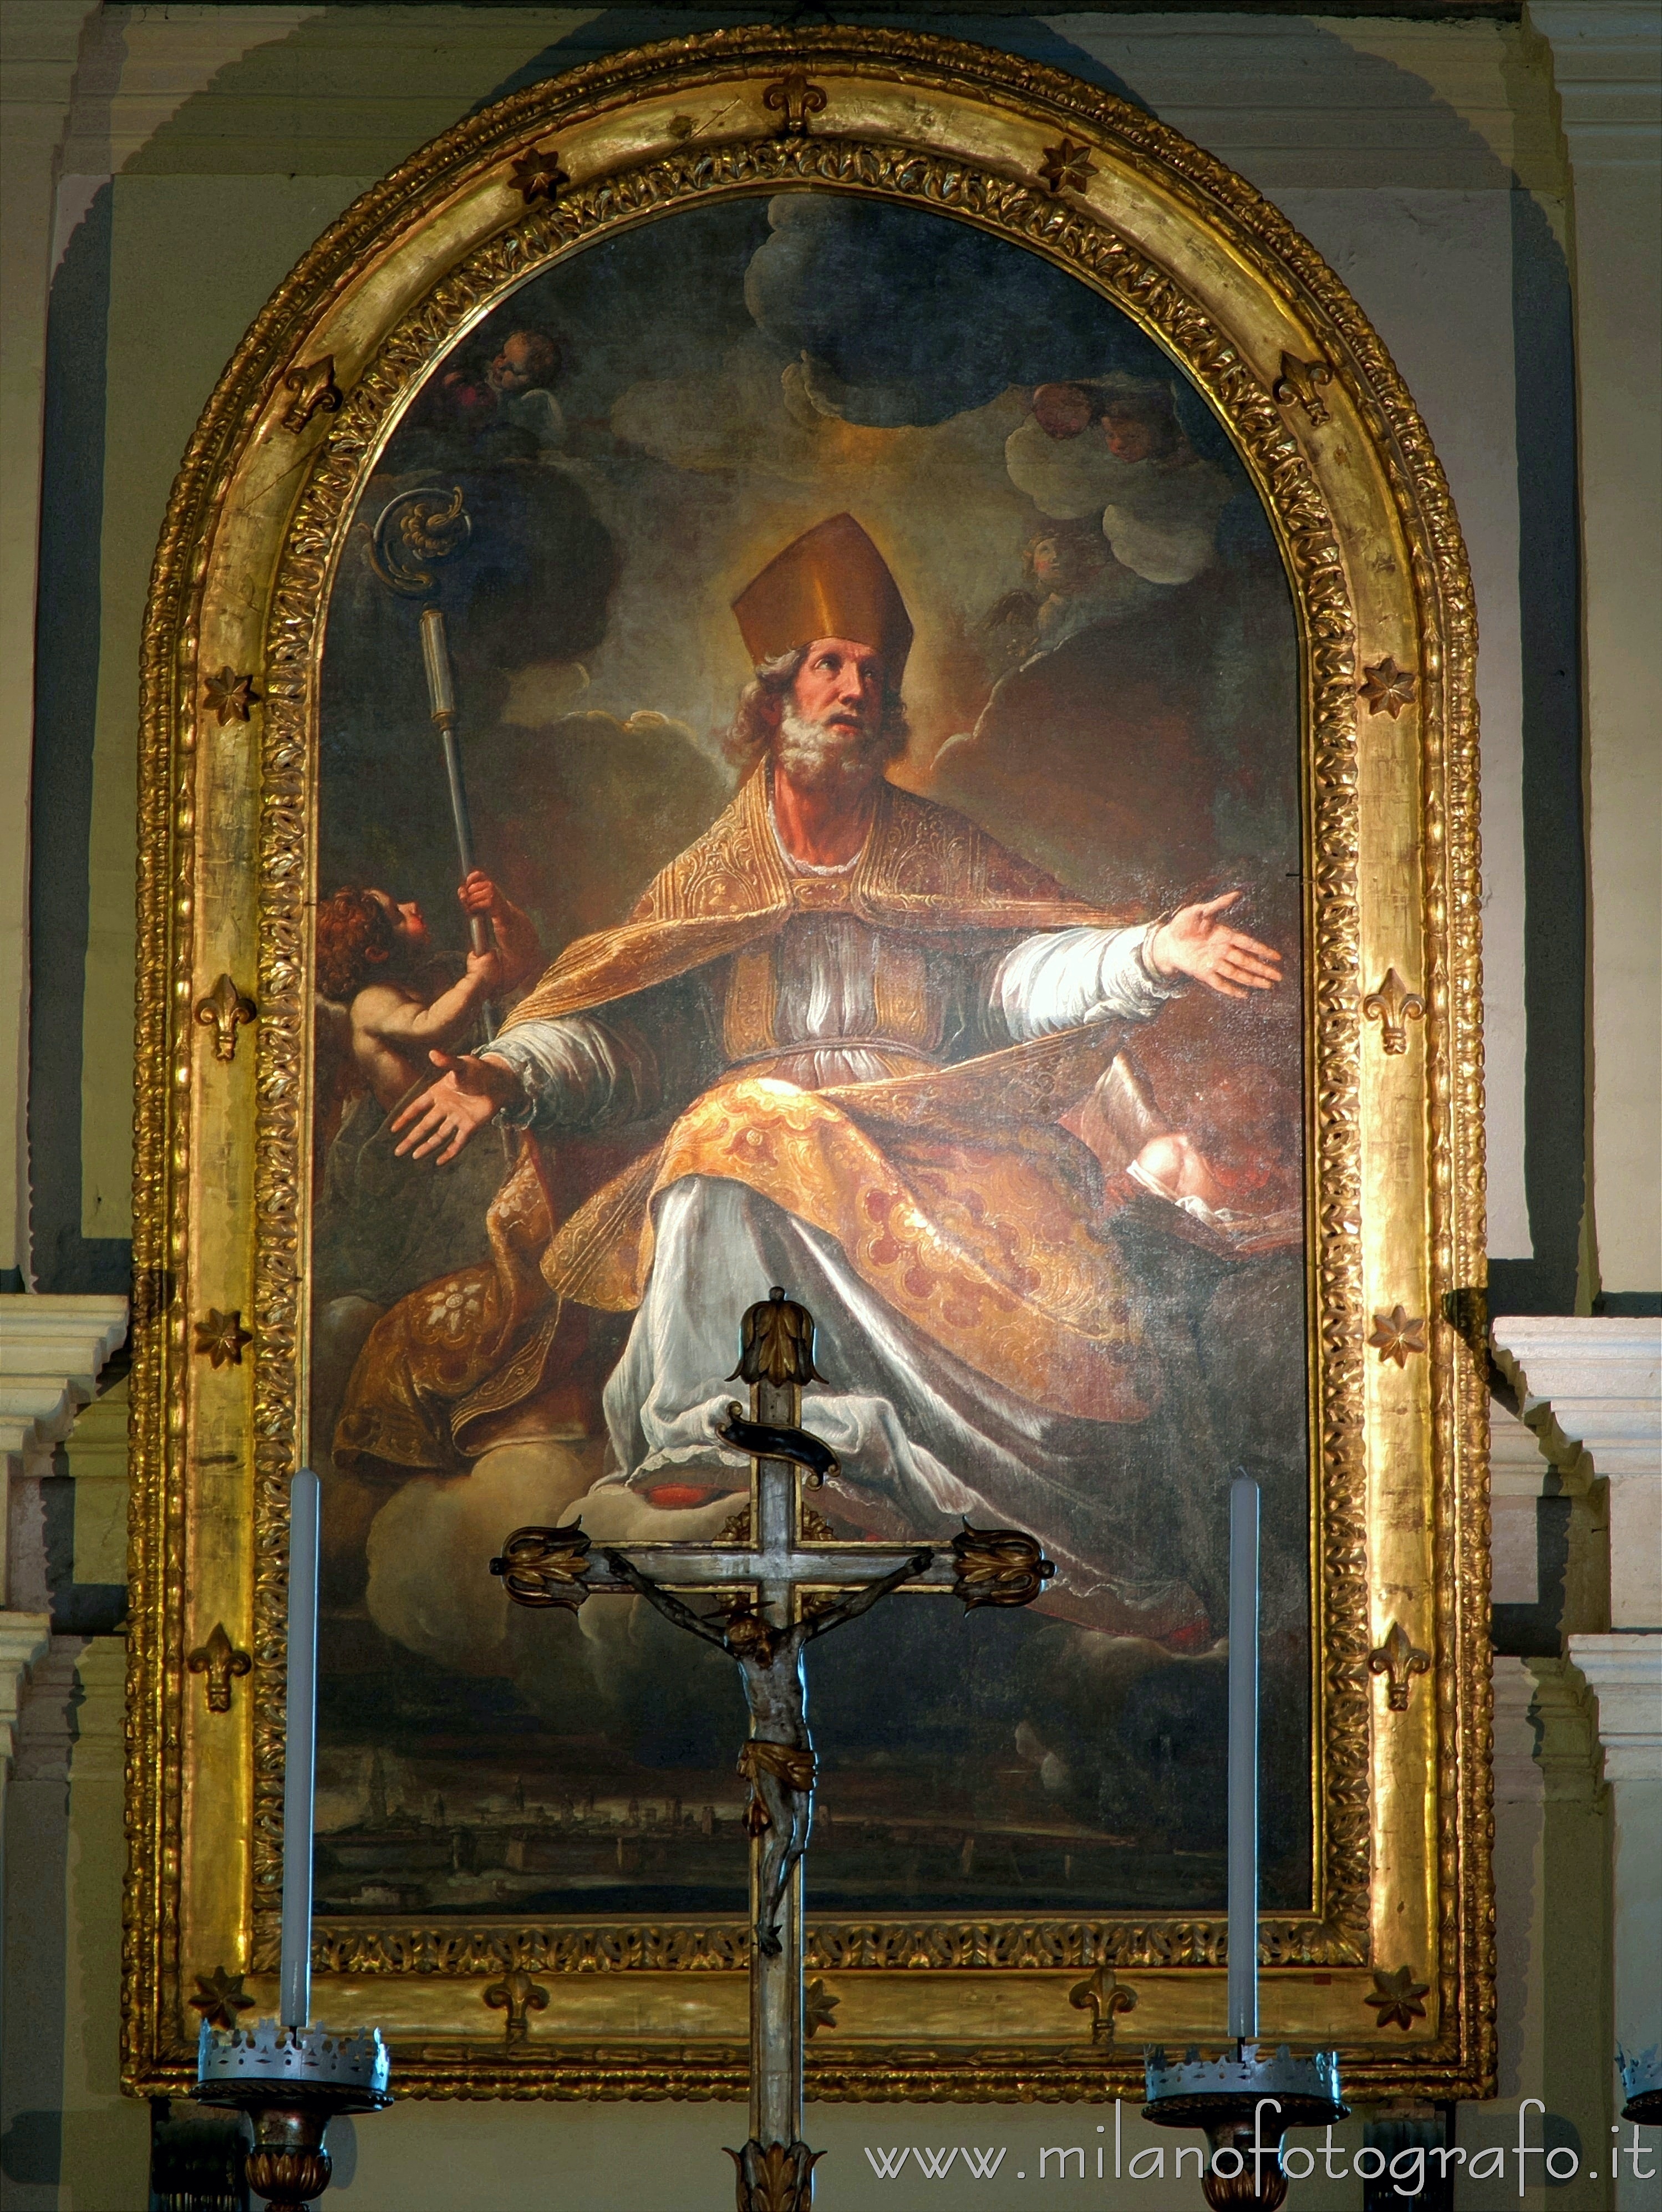 Fano (Pesaro e Urbino, Italy): Altarpiece of the main altar depicting San Paterniano in the basilica dedicated to him - Fano (Pesaro e Urbino, Italy)